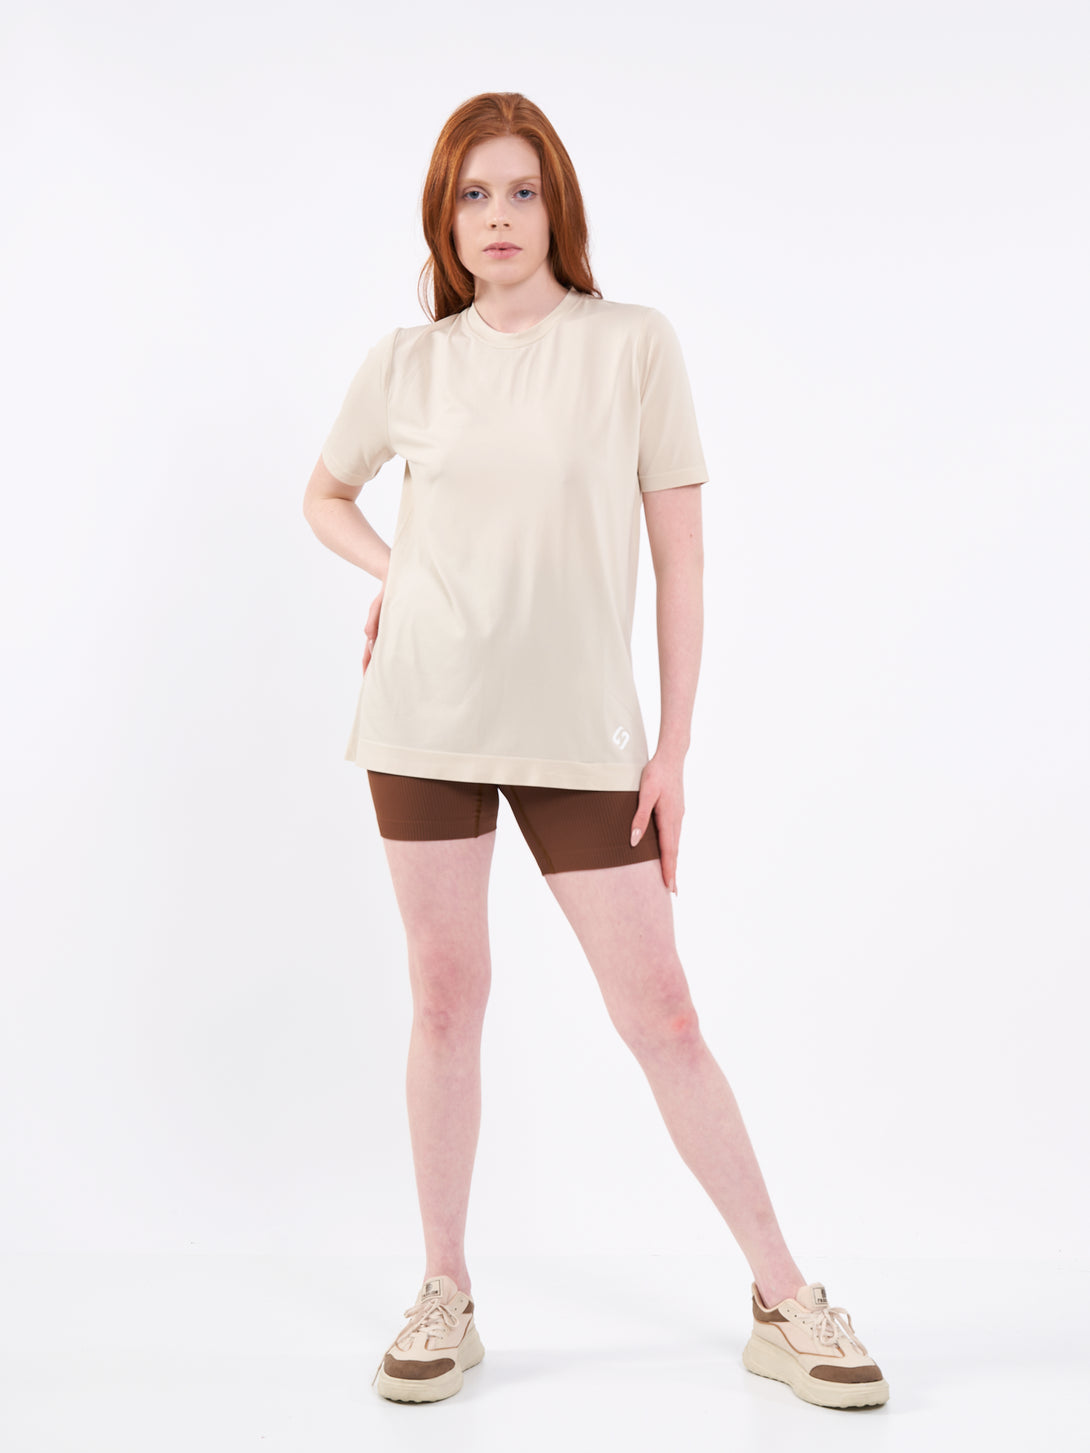 A Woman Wearing White Sand Color Unisex Seamless Melange T-Shirt. Enhanced Comfort